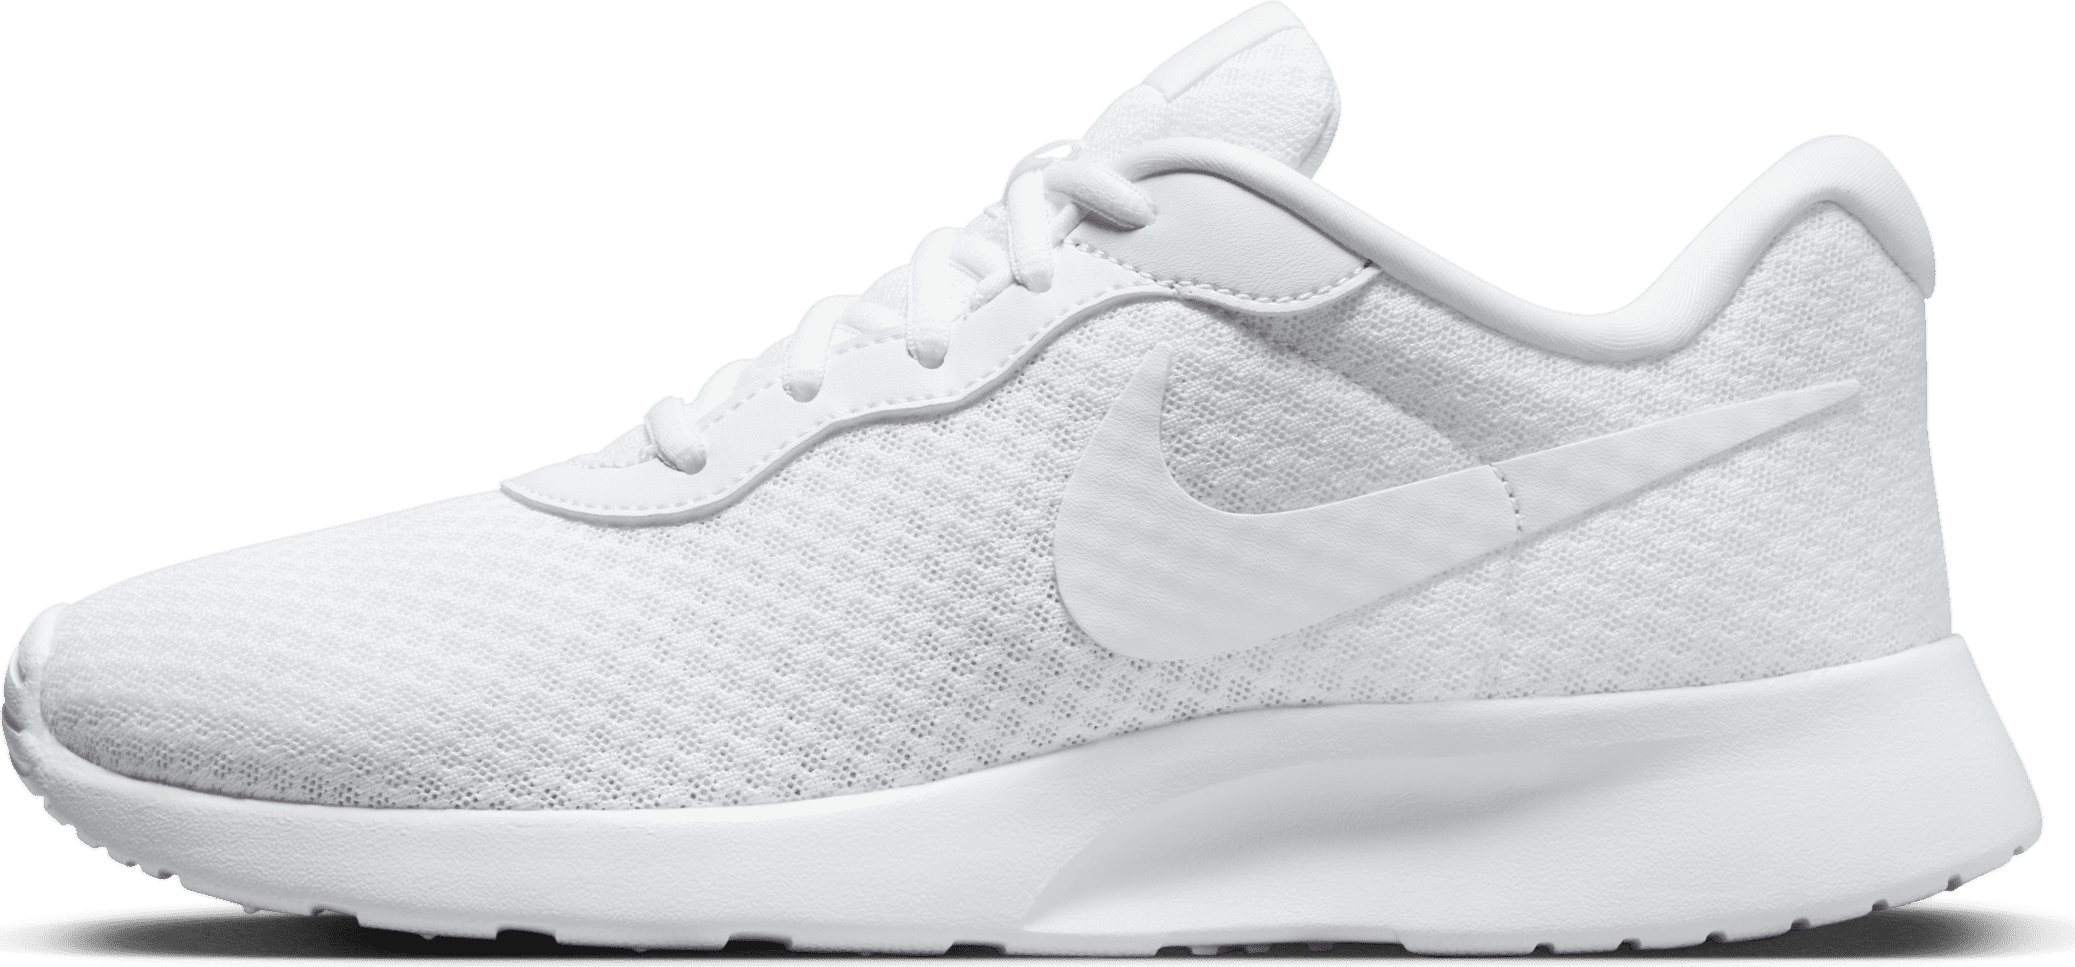 Nike Tanjun Ease-sko til kvinder hvid • Se pris